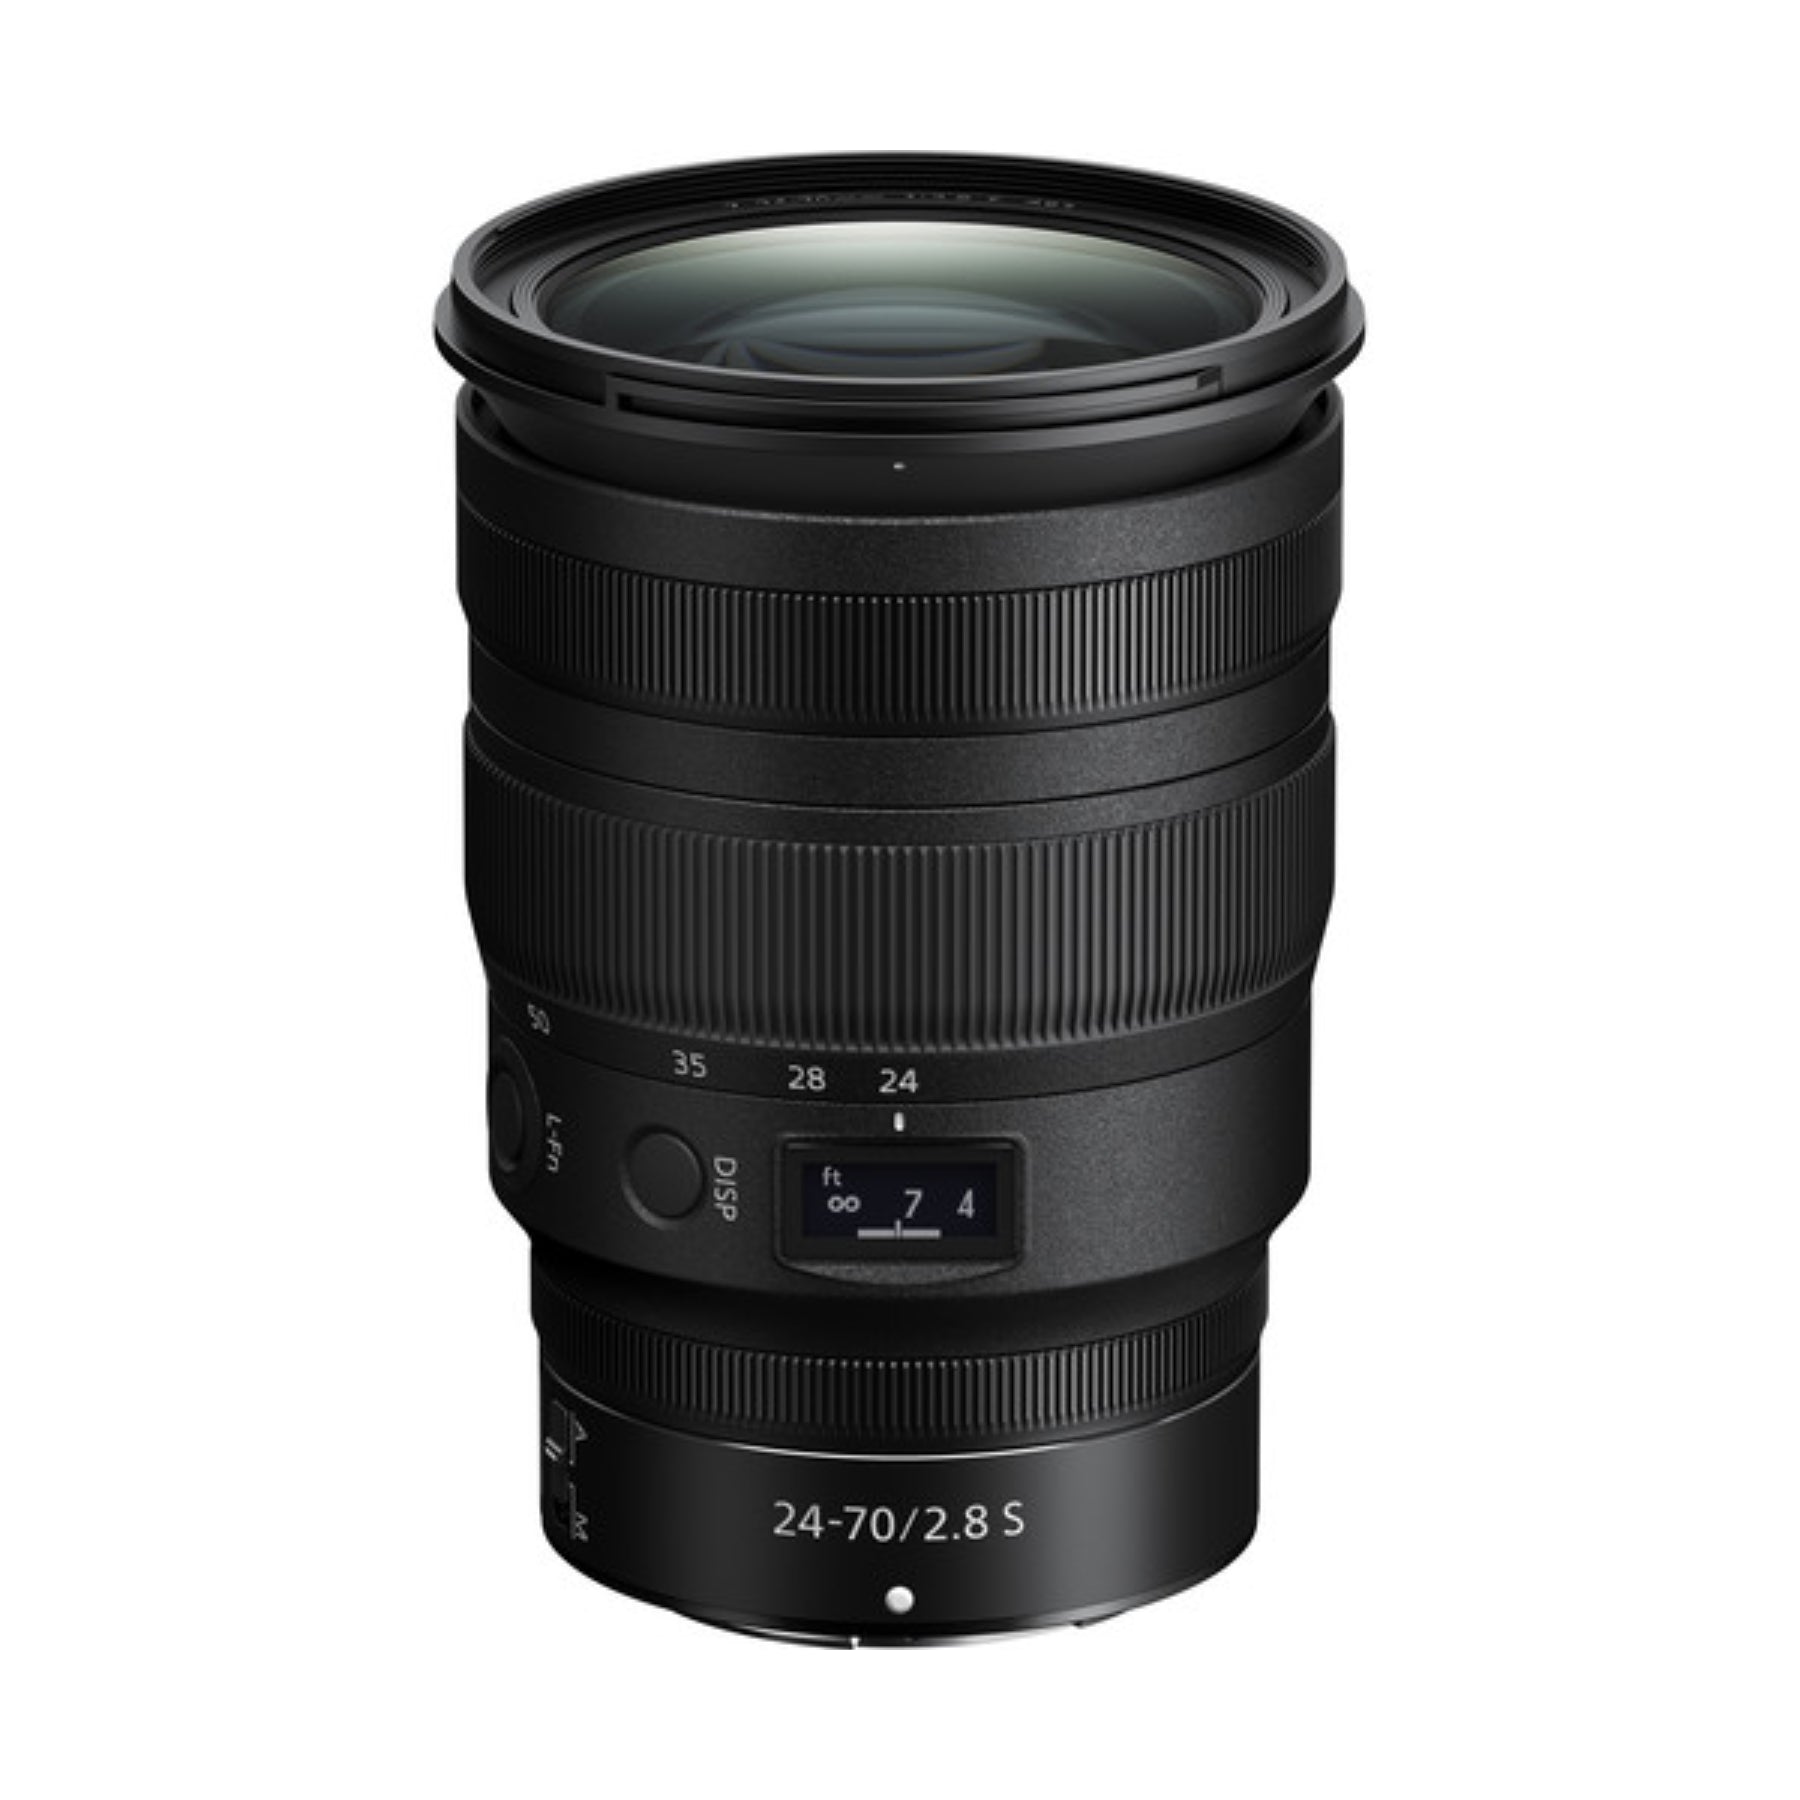 Buy Nikon NIKKOR Z 24-70mm f/2.8 S Lens at Topic Store